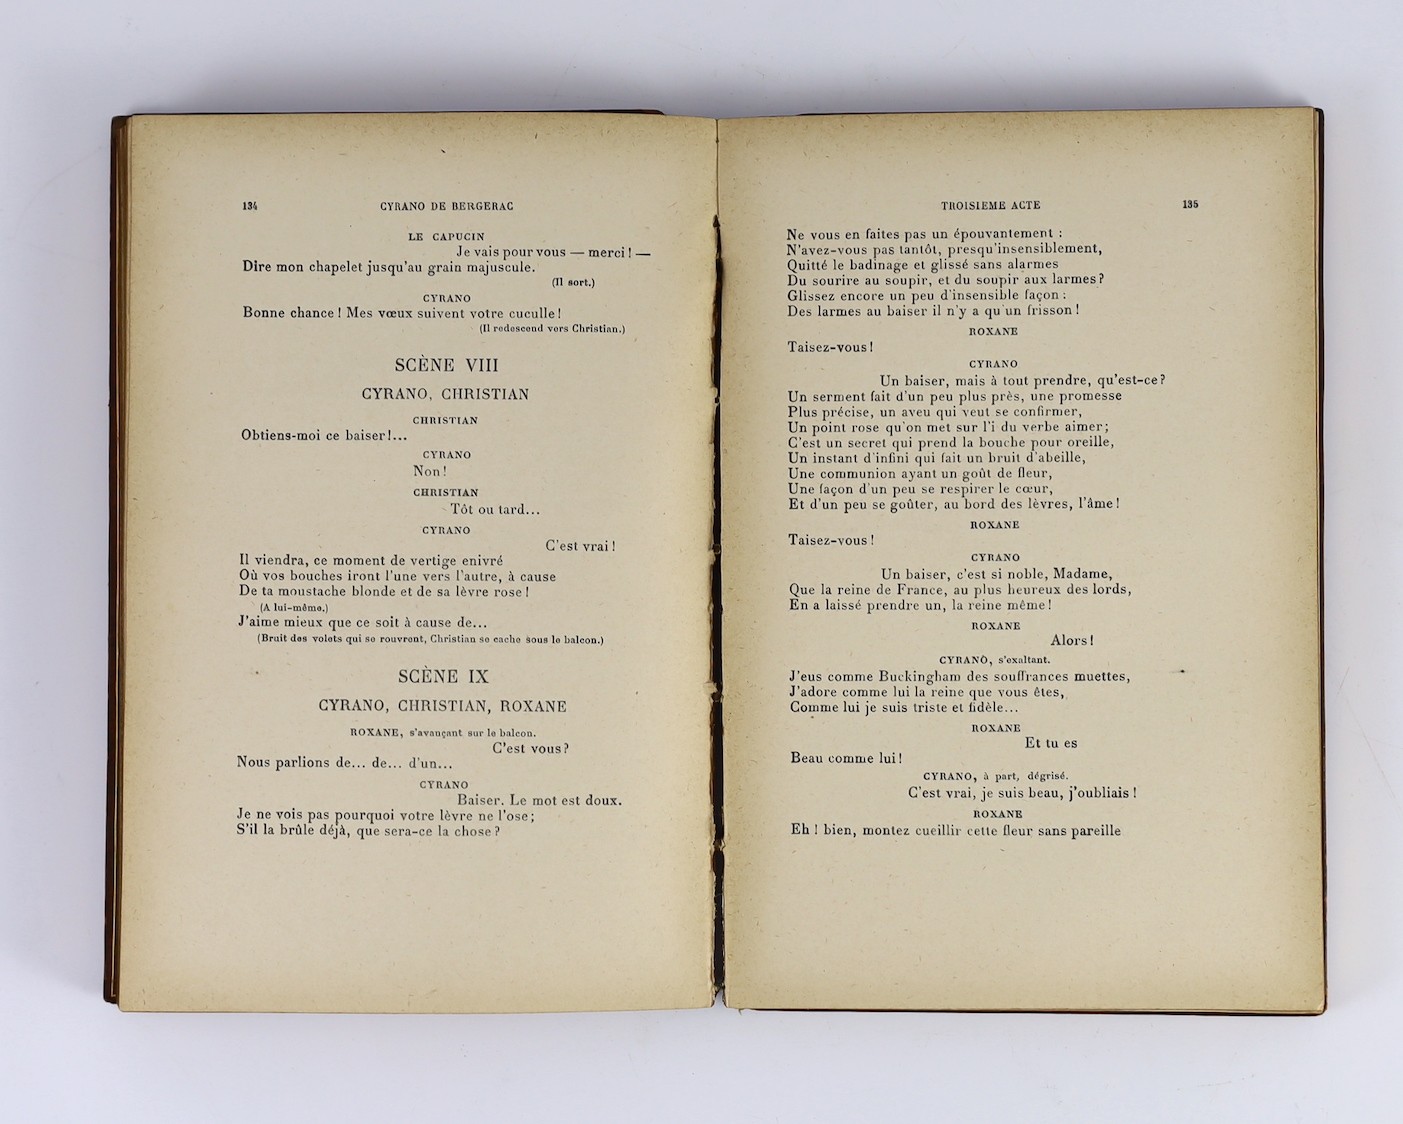 Rostand, Edmond - Cyrano de Bergerac, 12mo, University of Reading prize, tan calf gilt, stamped AP, dated 1900, Charpentier & Fasquelle, Paris, 1898